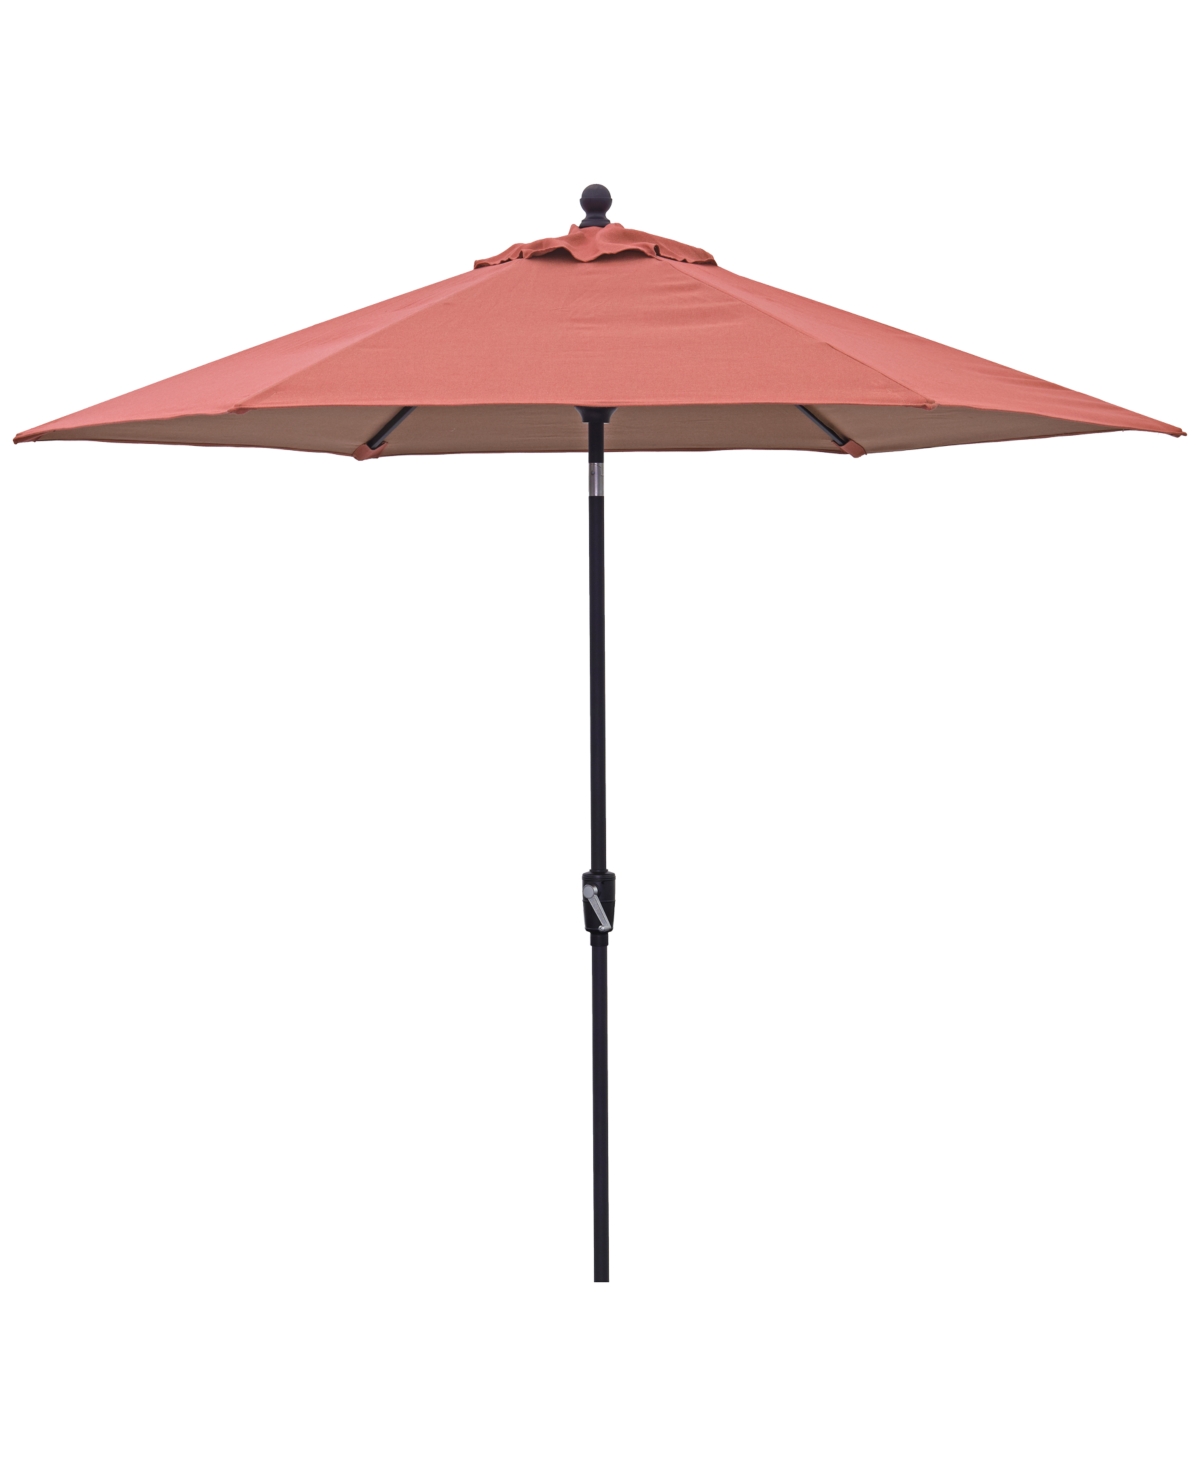 Agio Wythburn Mix And Match Fabric 9' Auto Tilt Umbrella In Peony Brick Red,bronze Finish